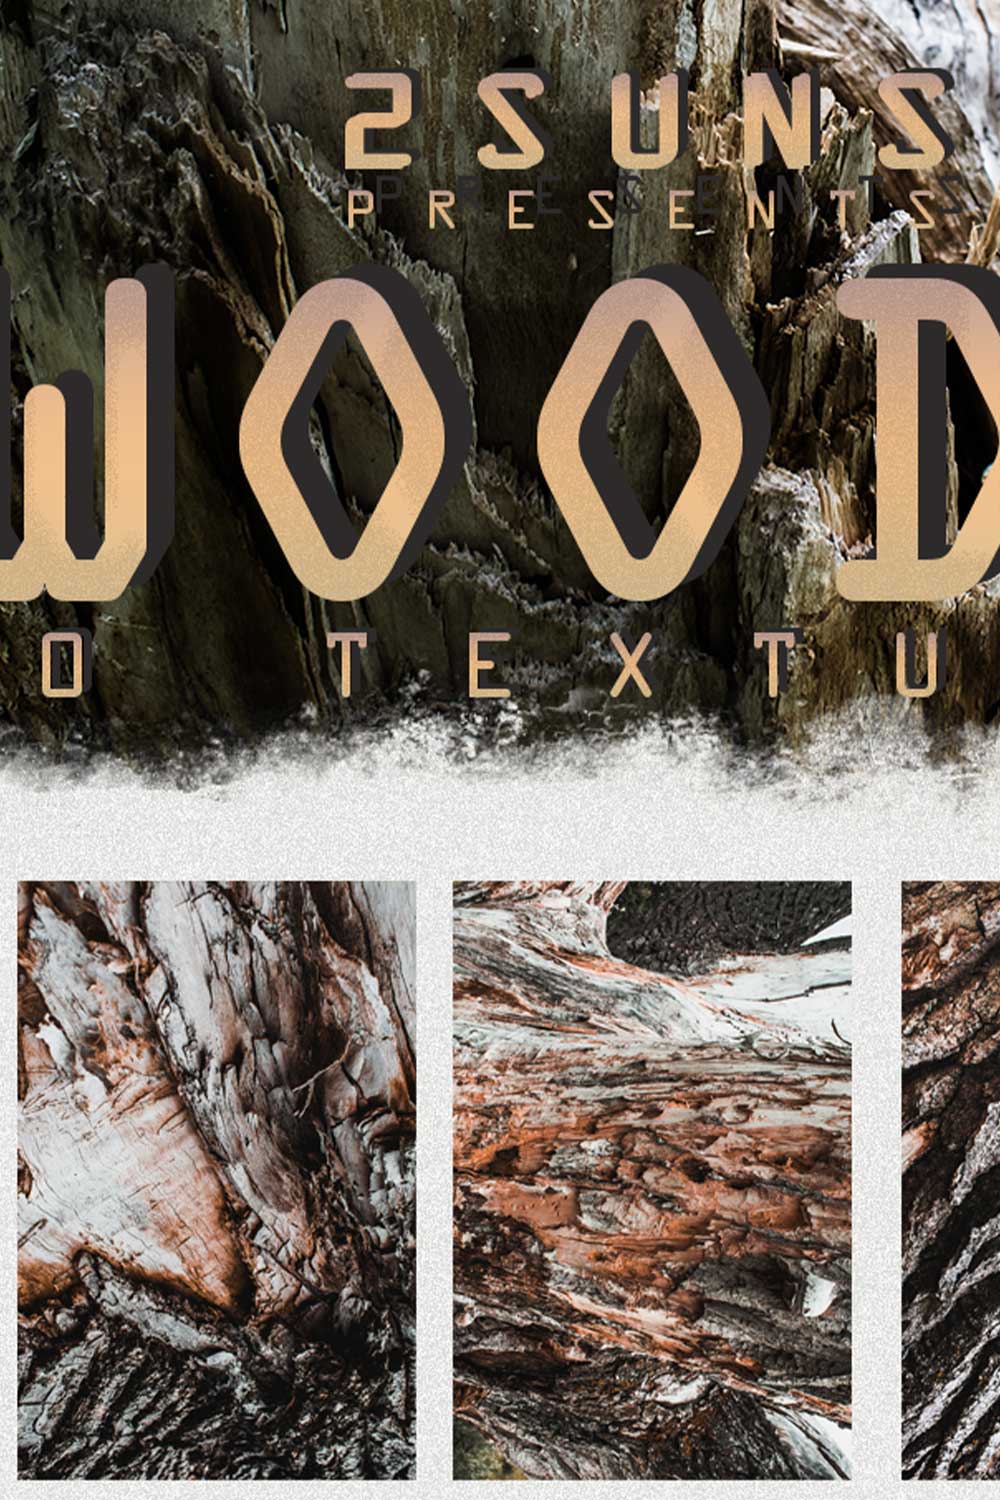 Wood Rustic Tree Overlay Photoshop Textures Pinterest Image.